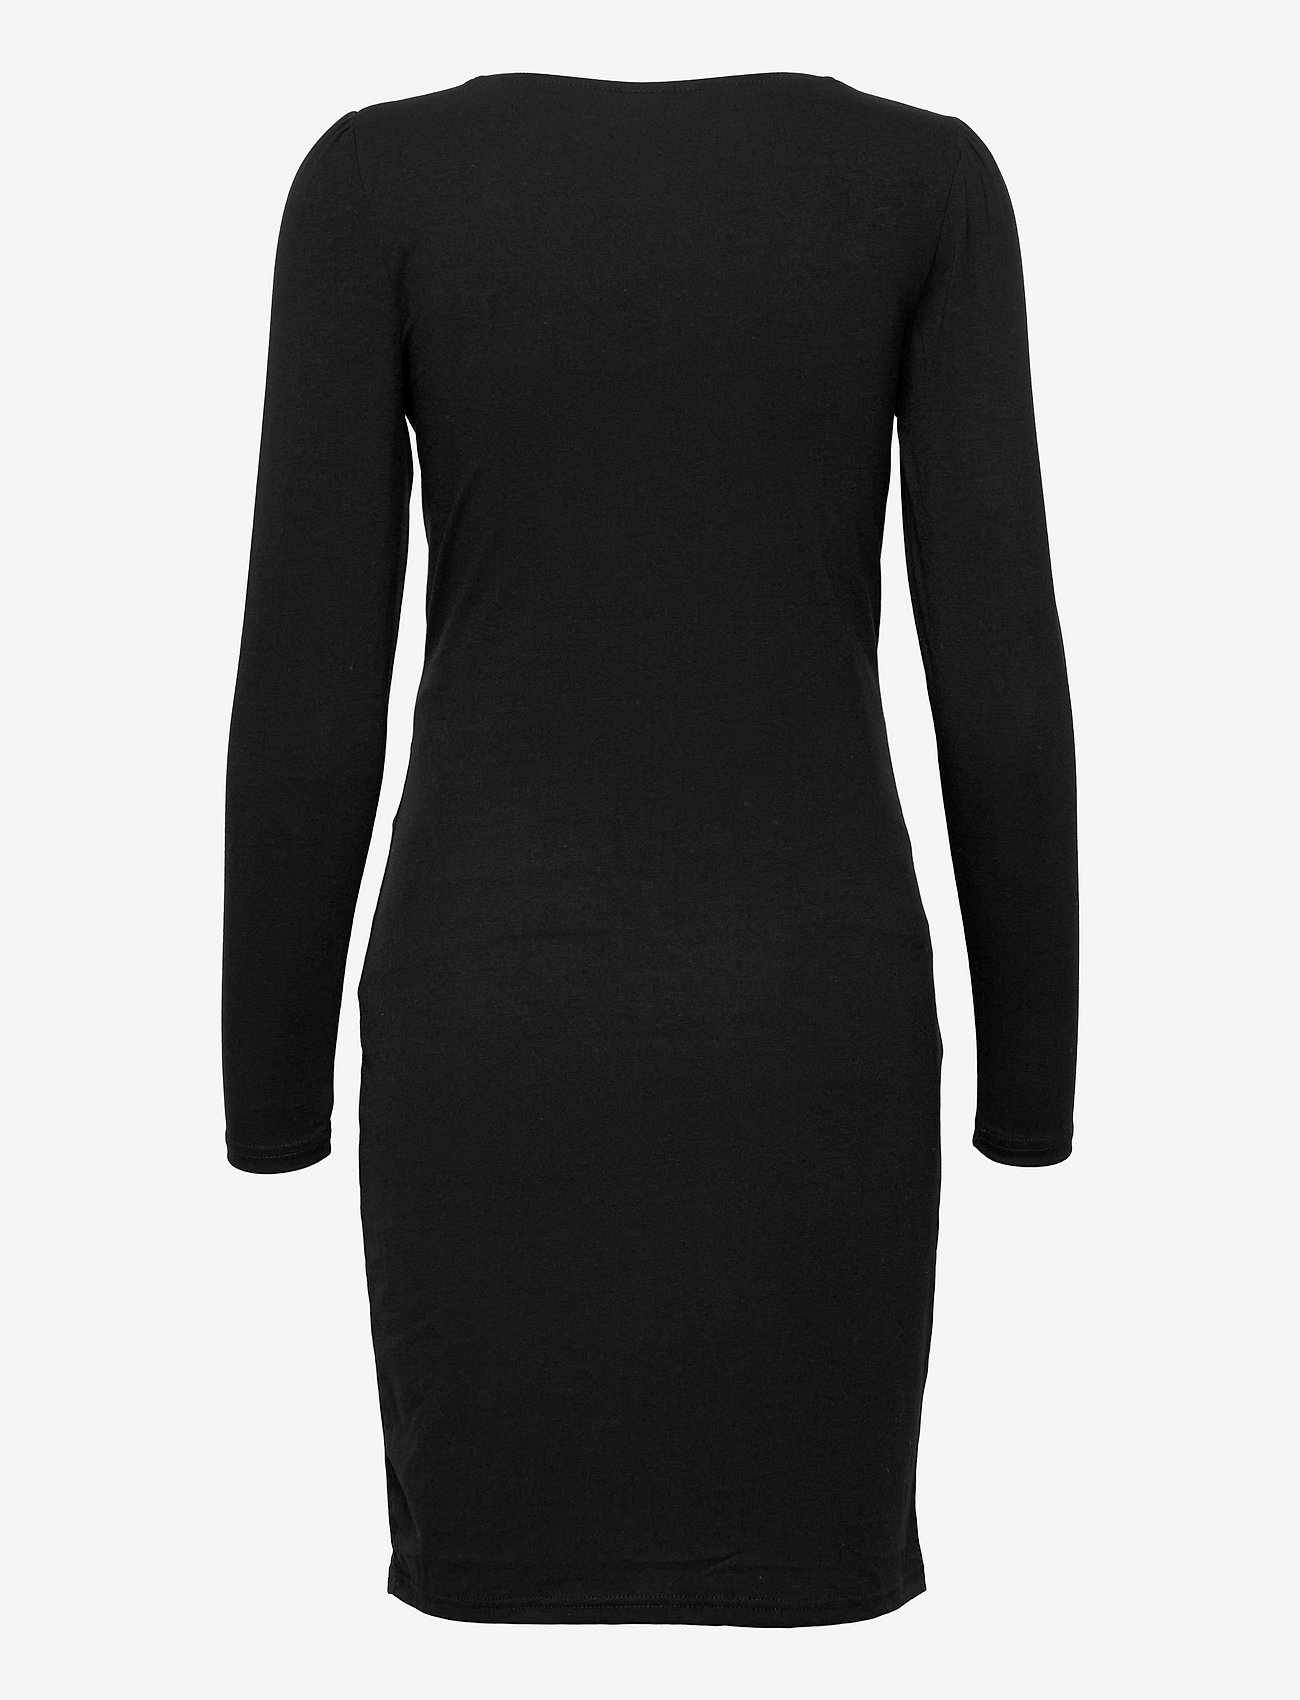 Mamalicious - MLMACY L/S JERSEY ABK DRESS 2F - midi dresses - black - 1